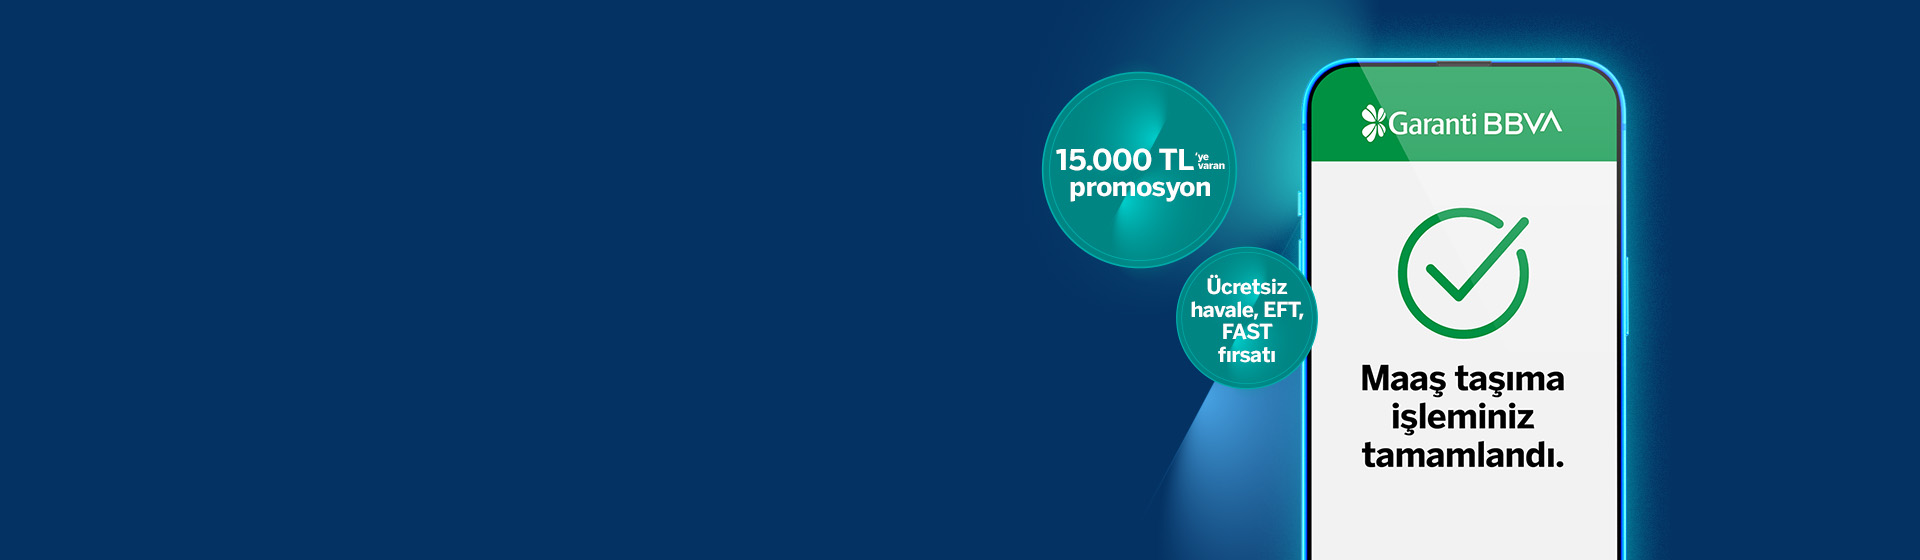 Emekli maaşını Garanti BBVA’dan alanlara 12.000 TL’ye varan promosyon!